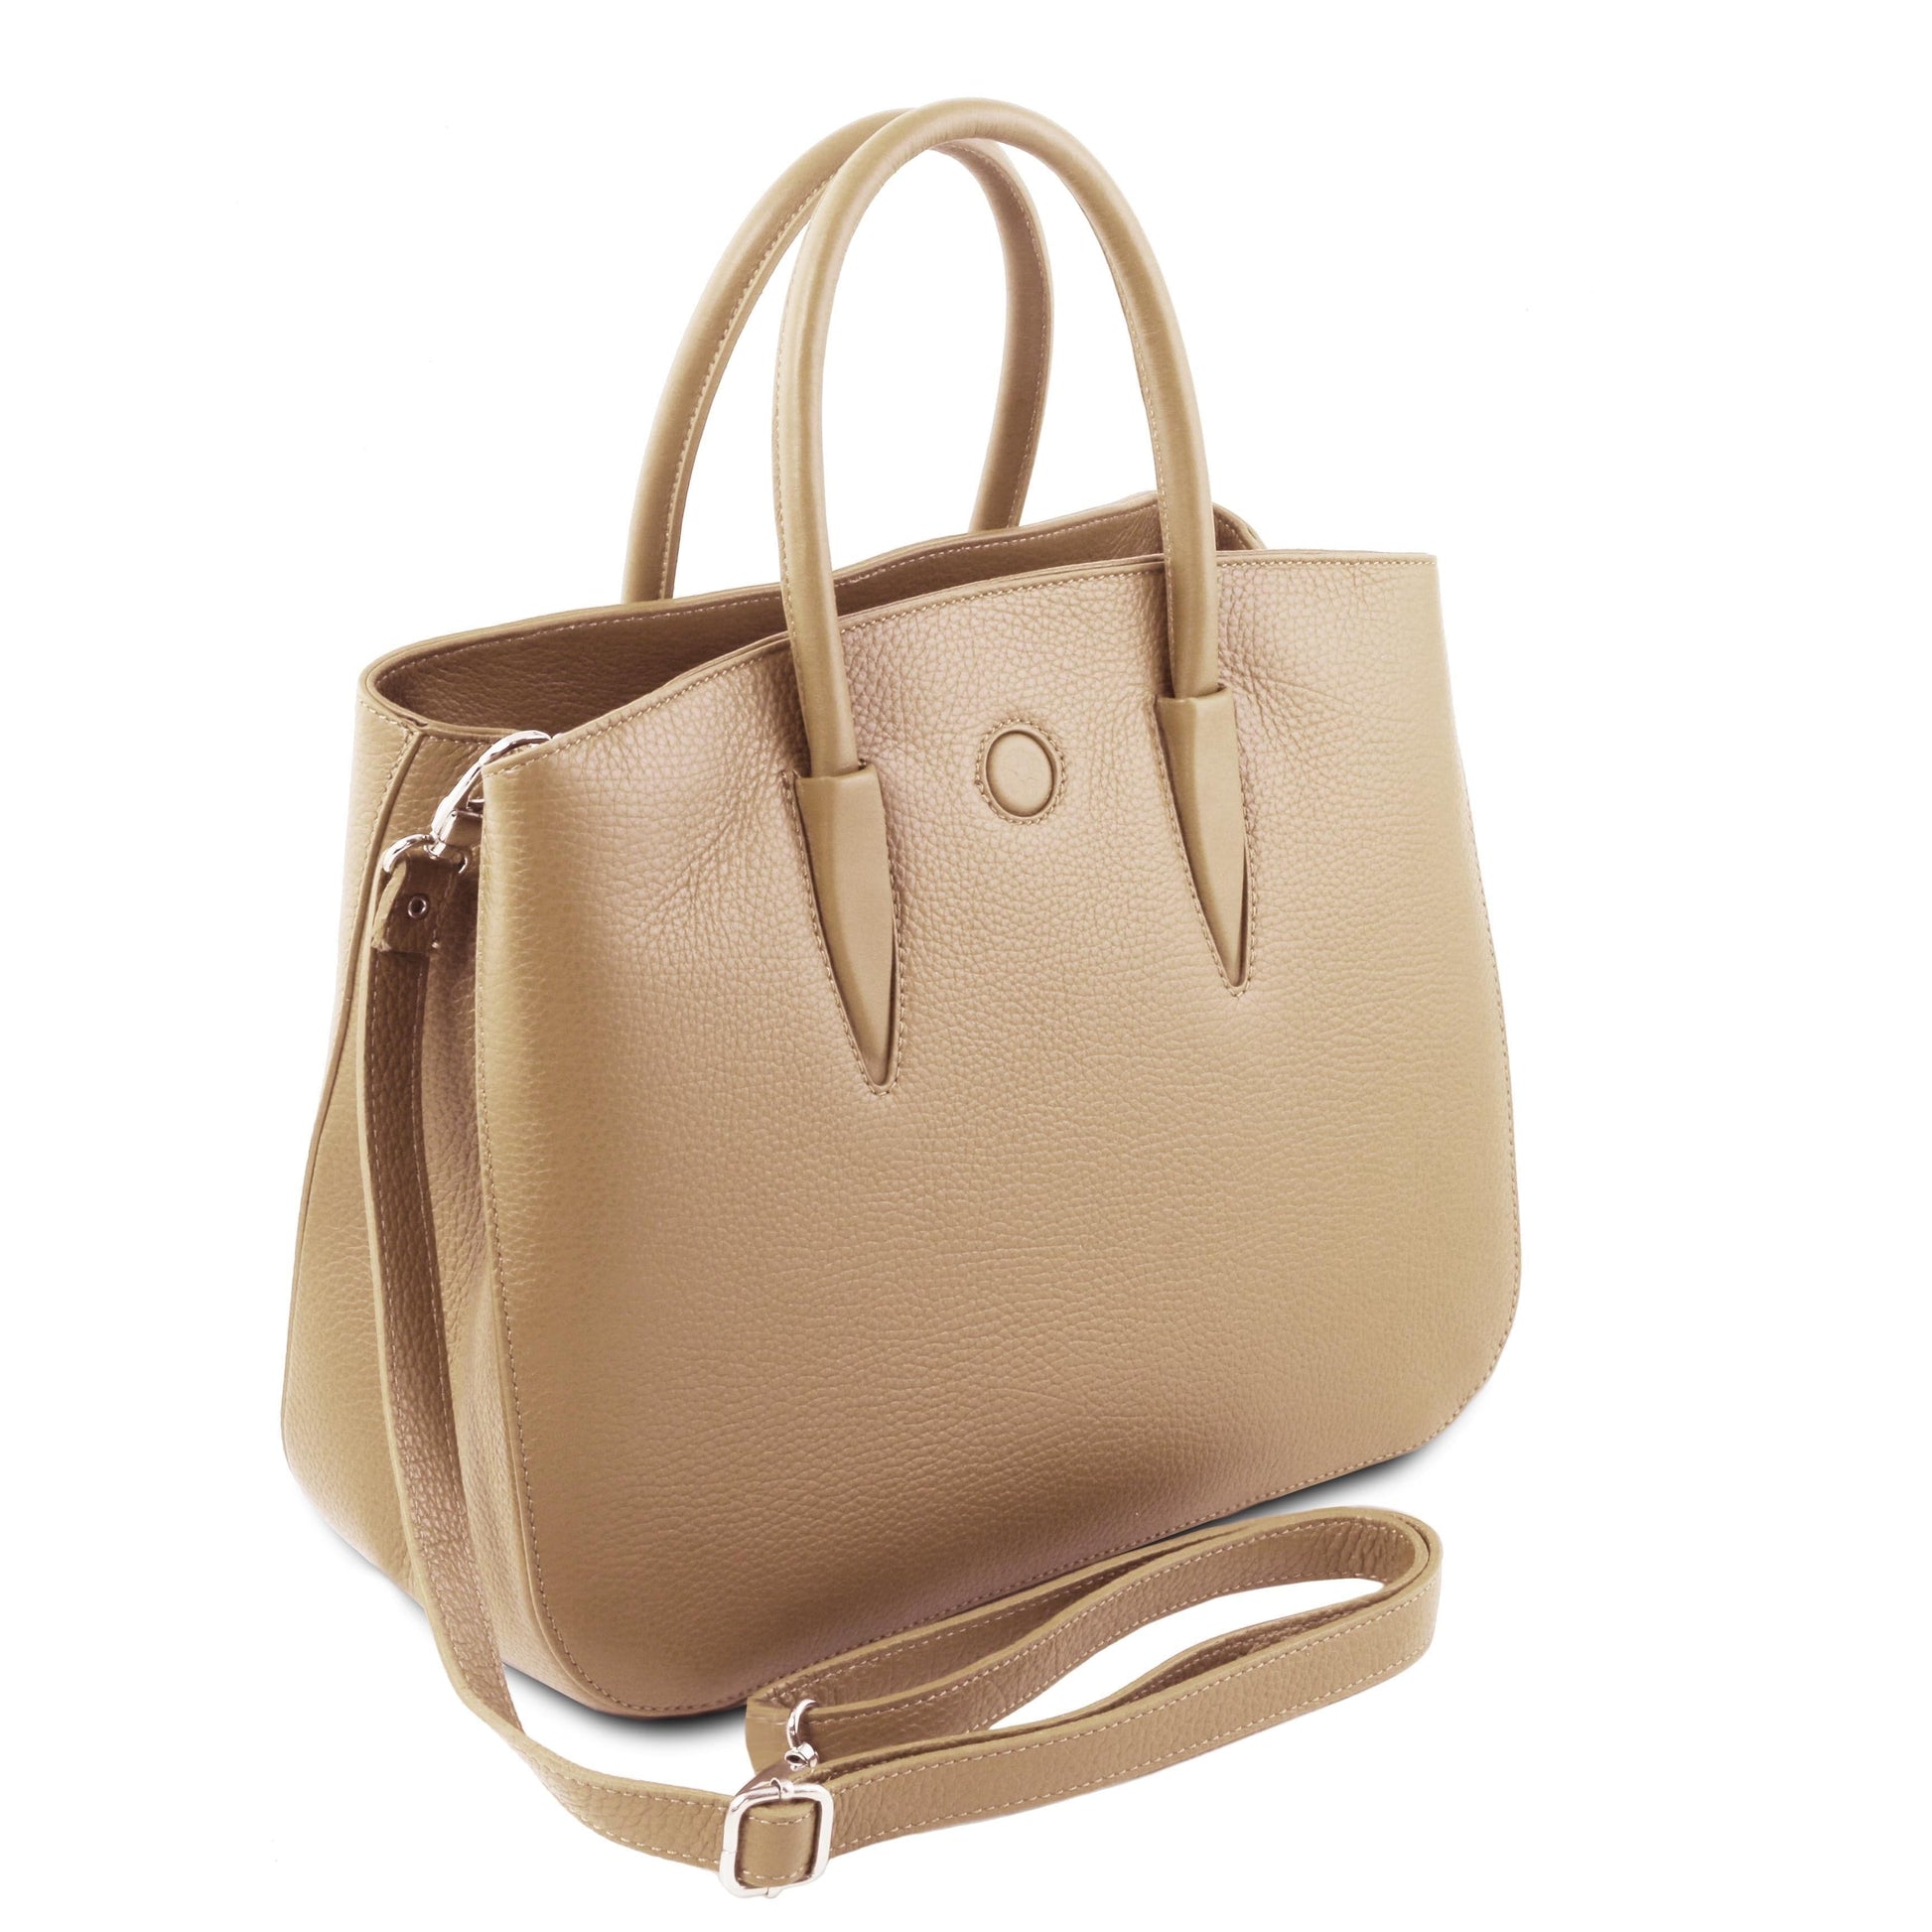 Camelia - Leather handbag | TL141728 - Premium Leather handbags - Just €124.44! Shop now at San Rocco Italia